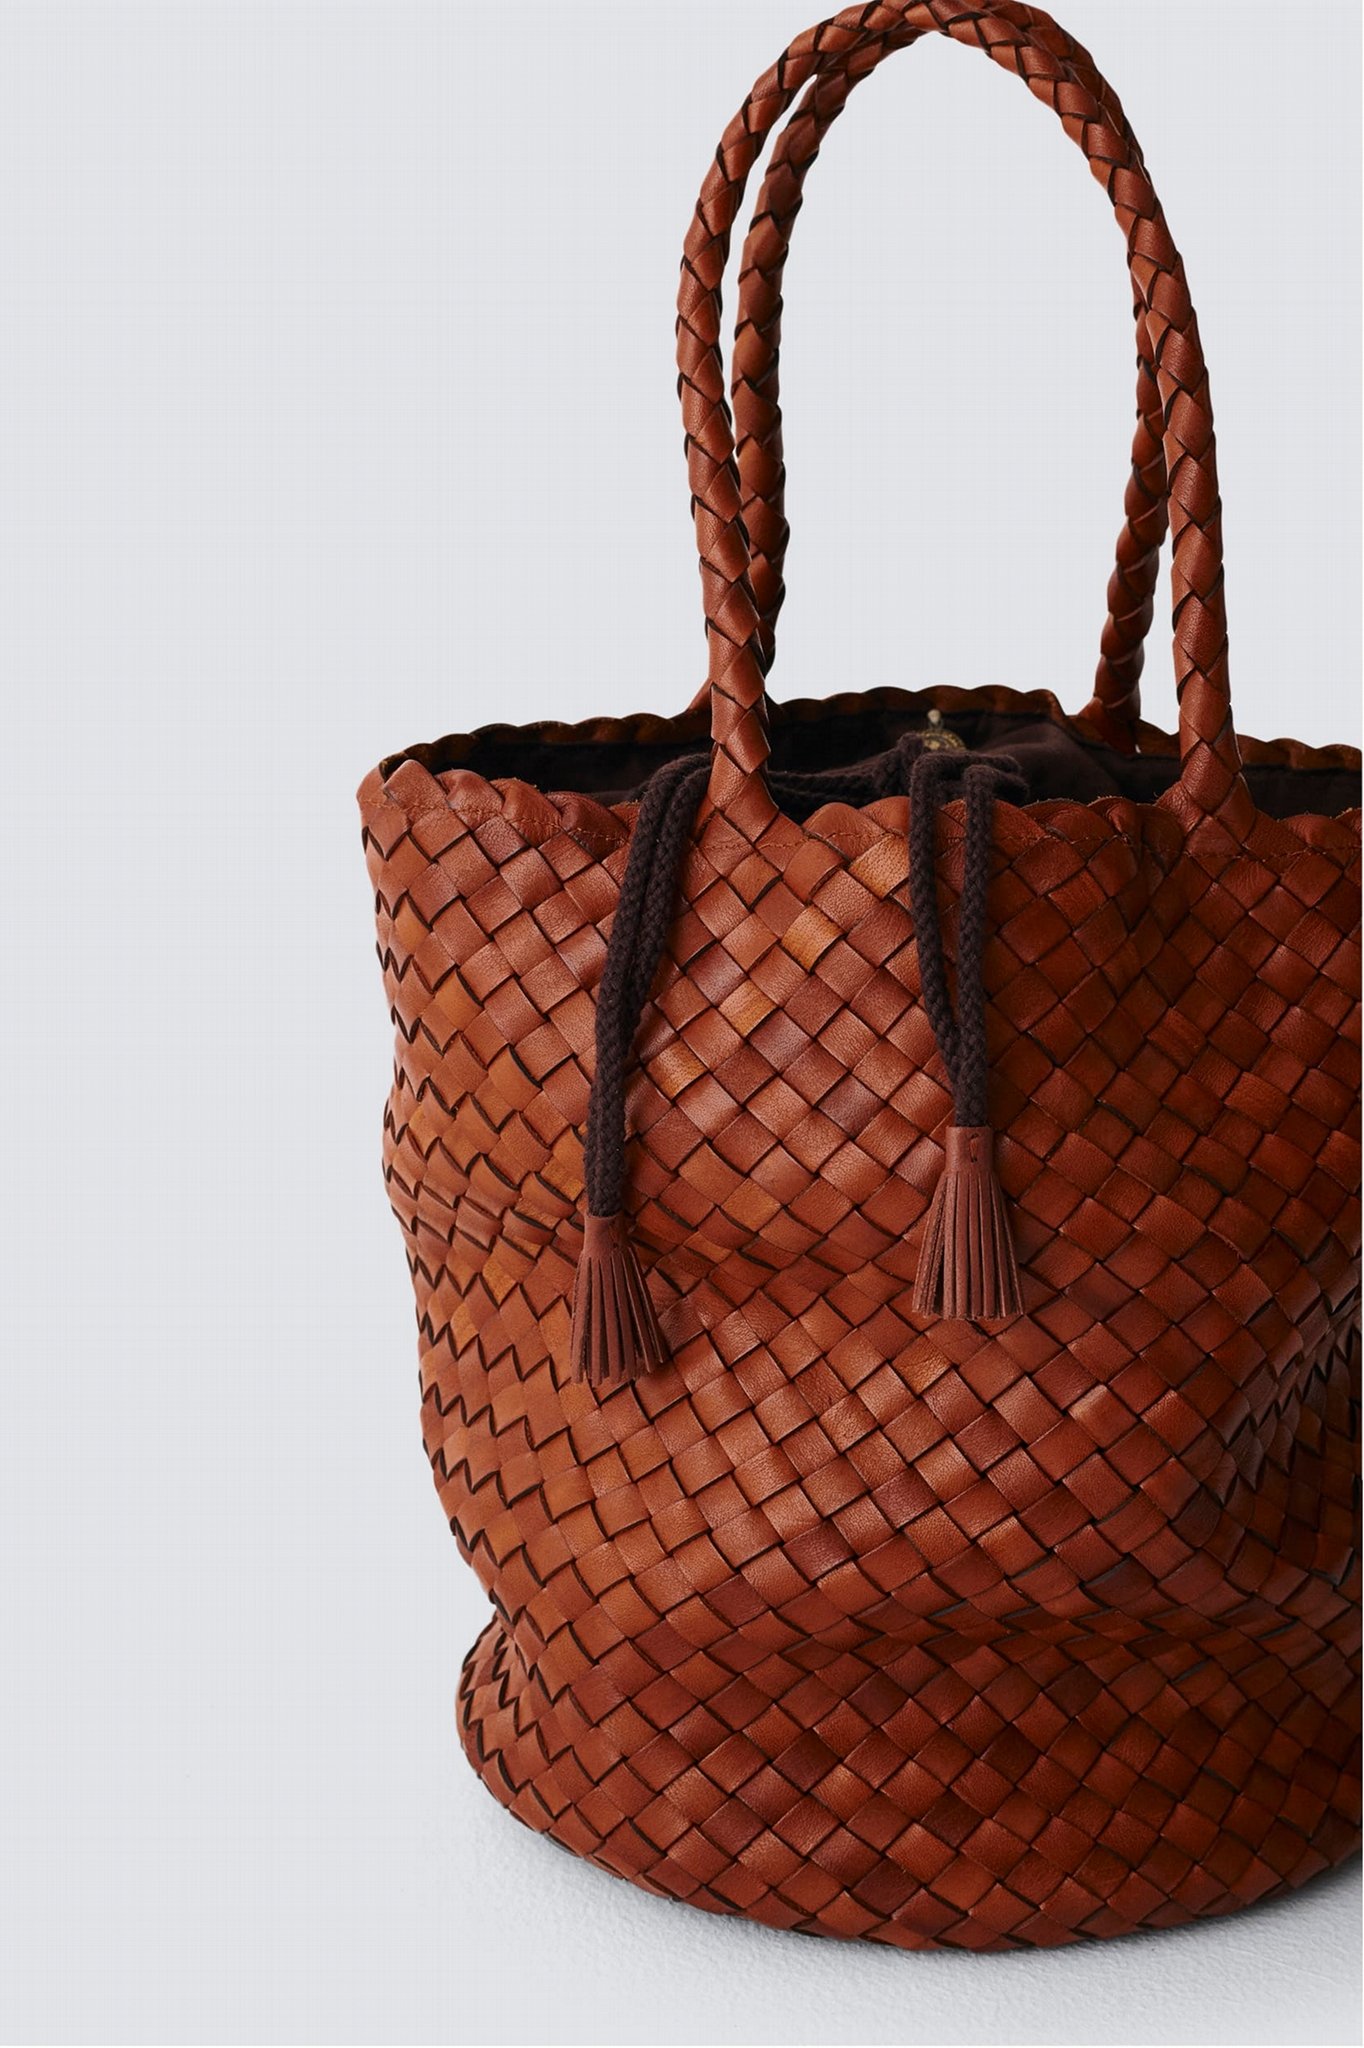 Stysion Handmade Leather Woven Bags - Artisanal Elegance 2